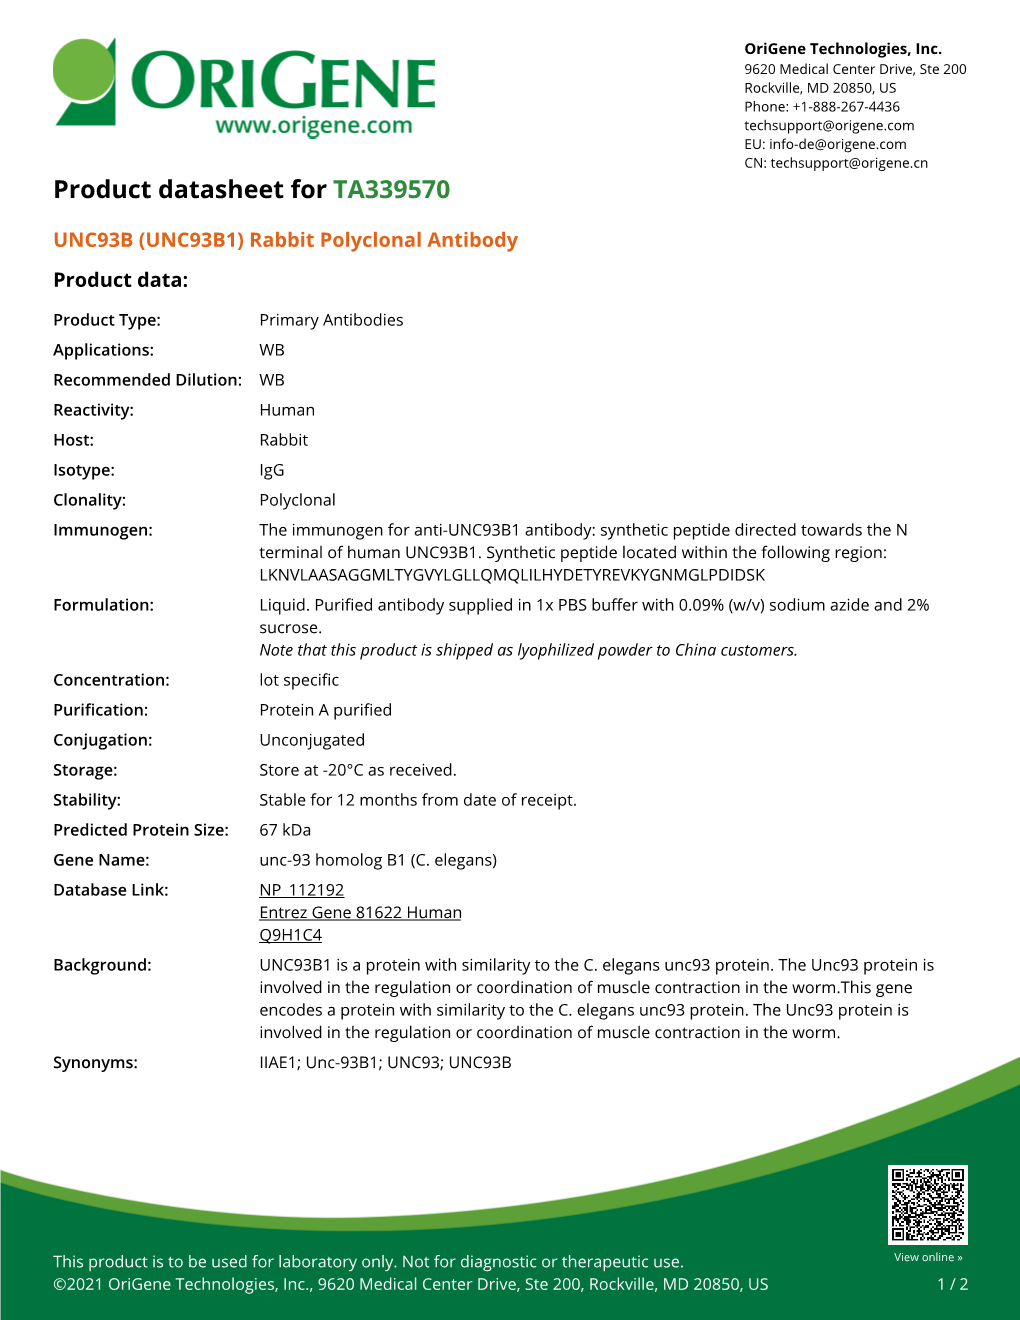 UNC93B (UNC93B1) Rabbit Polyclonal Antibody Product Data